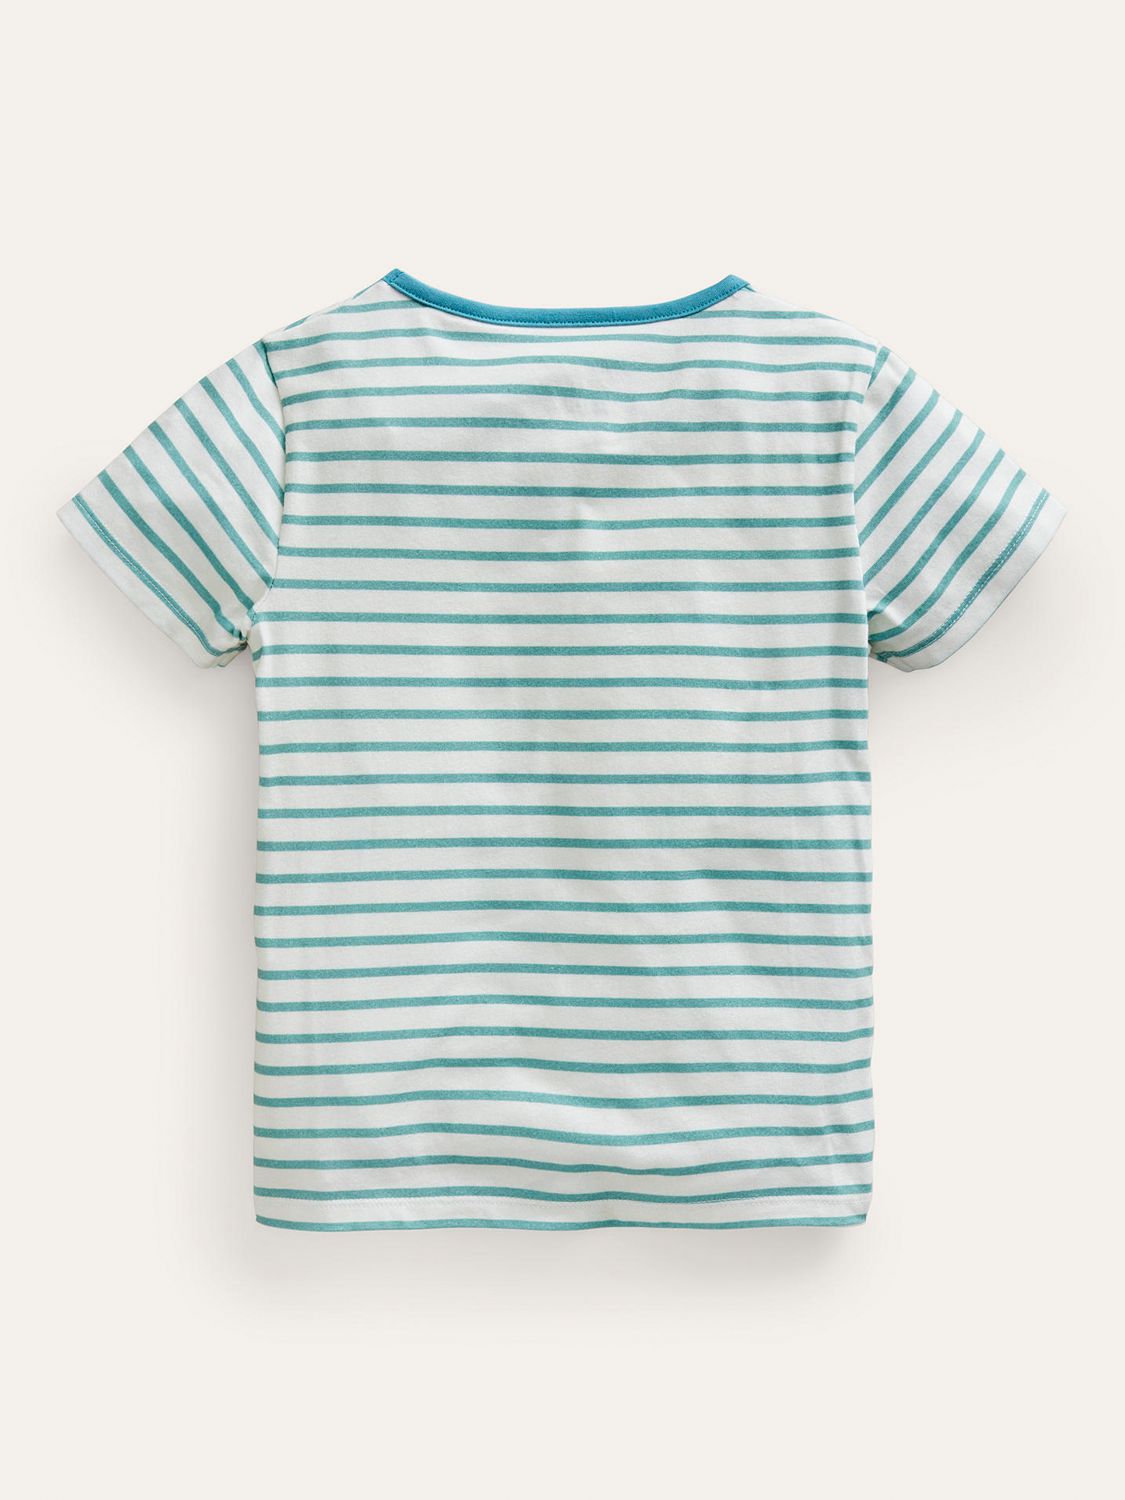 Mini Boden Kids' Ice Cream Cat Applique Stripe T-Shirt, Blue, 2-3 years